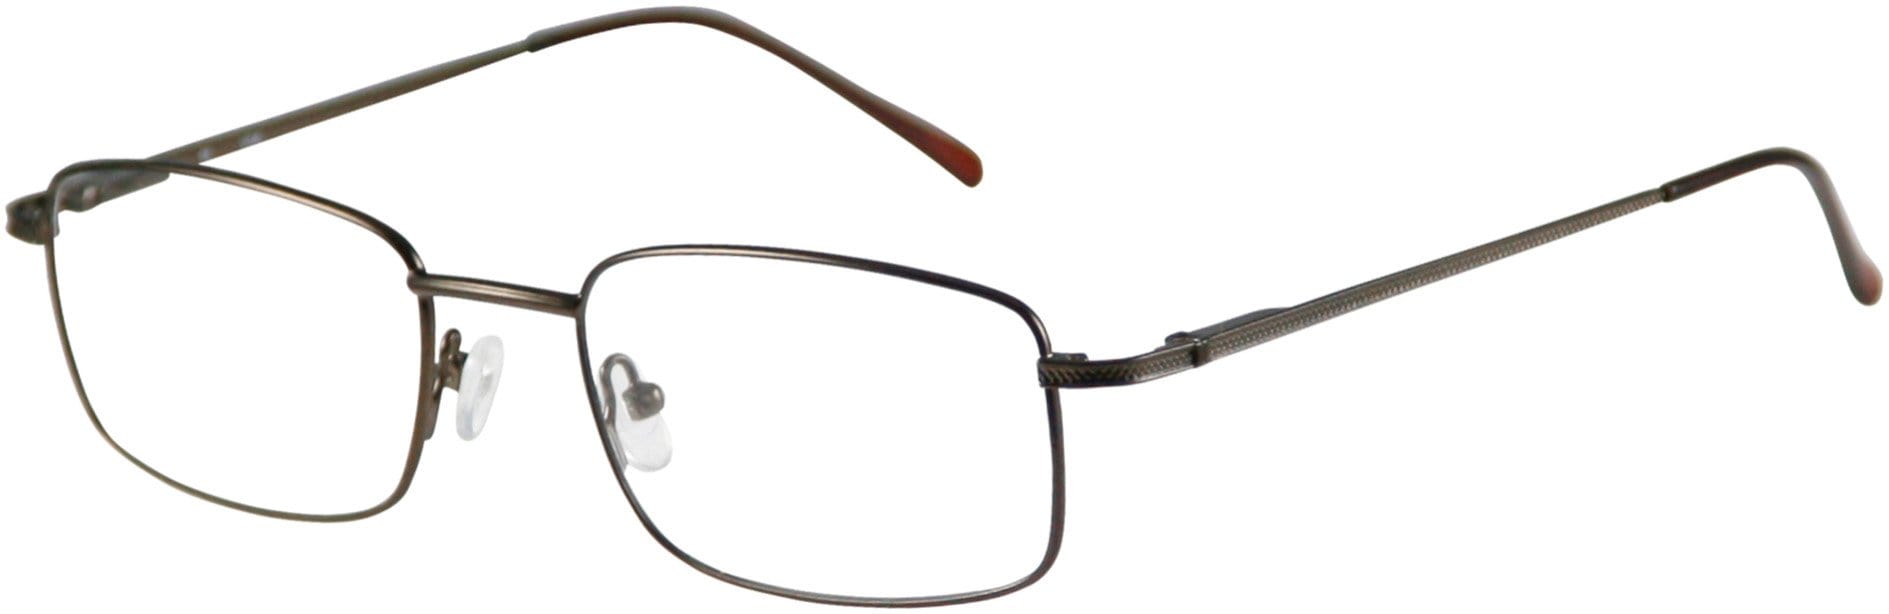 Viva VV0260 Eyeglasses J14-J14 - Metal